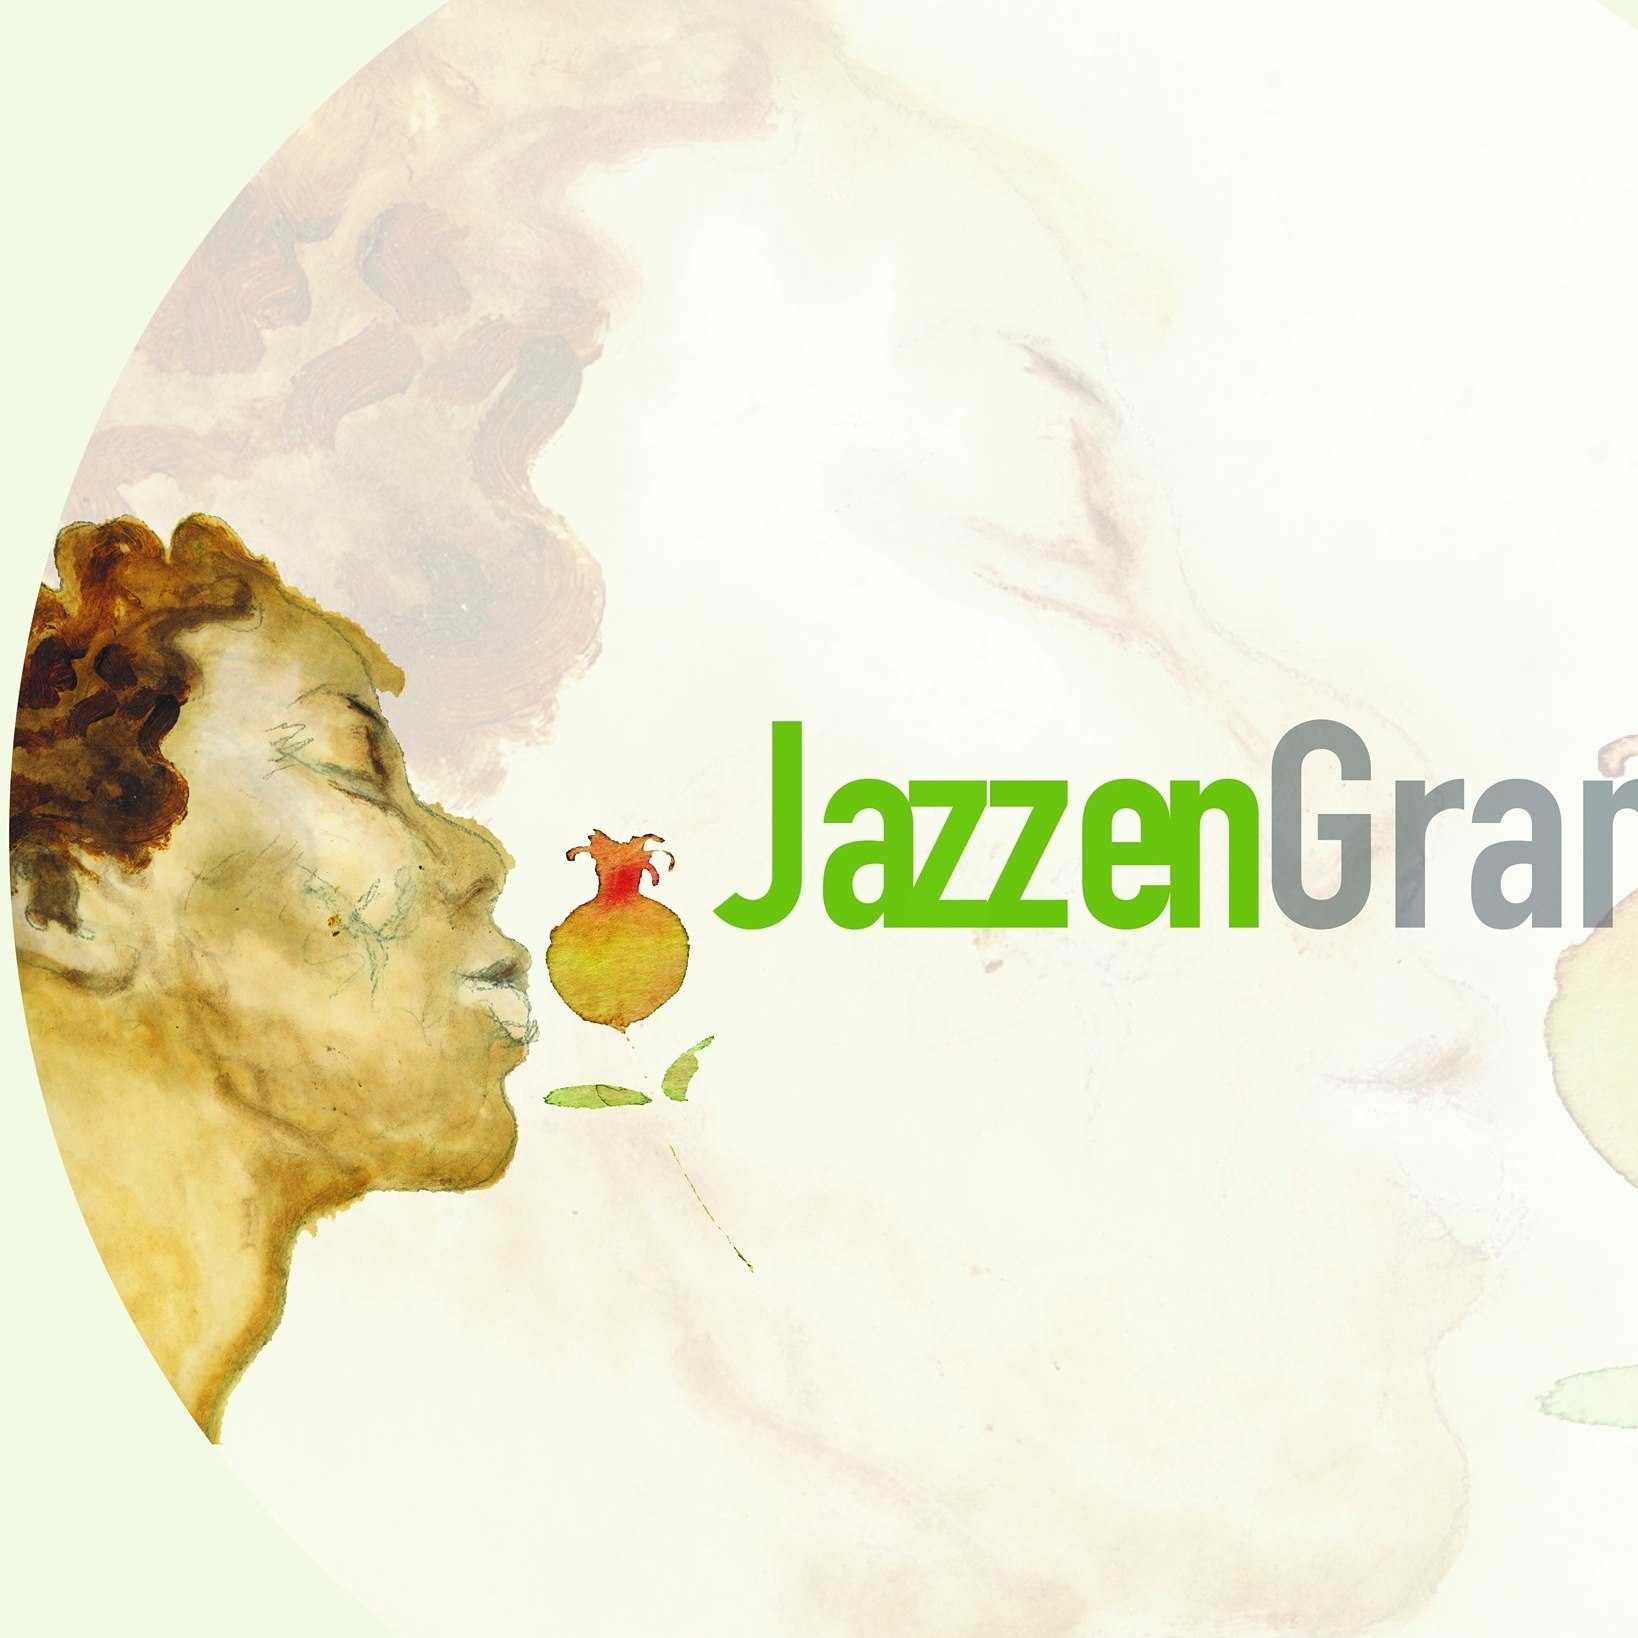 Festival International de Jazz de Grenade